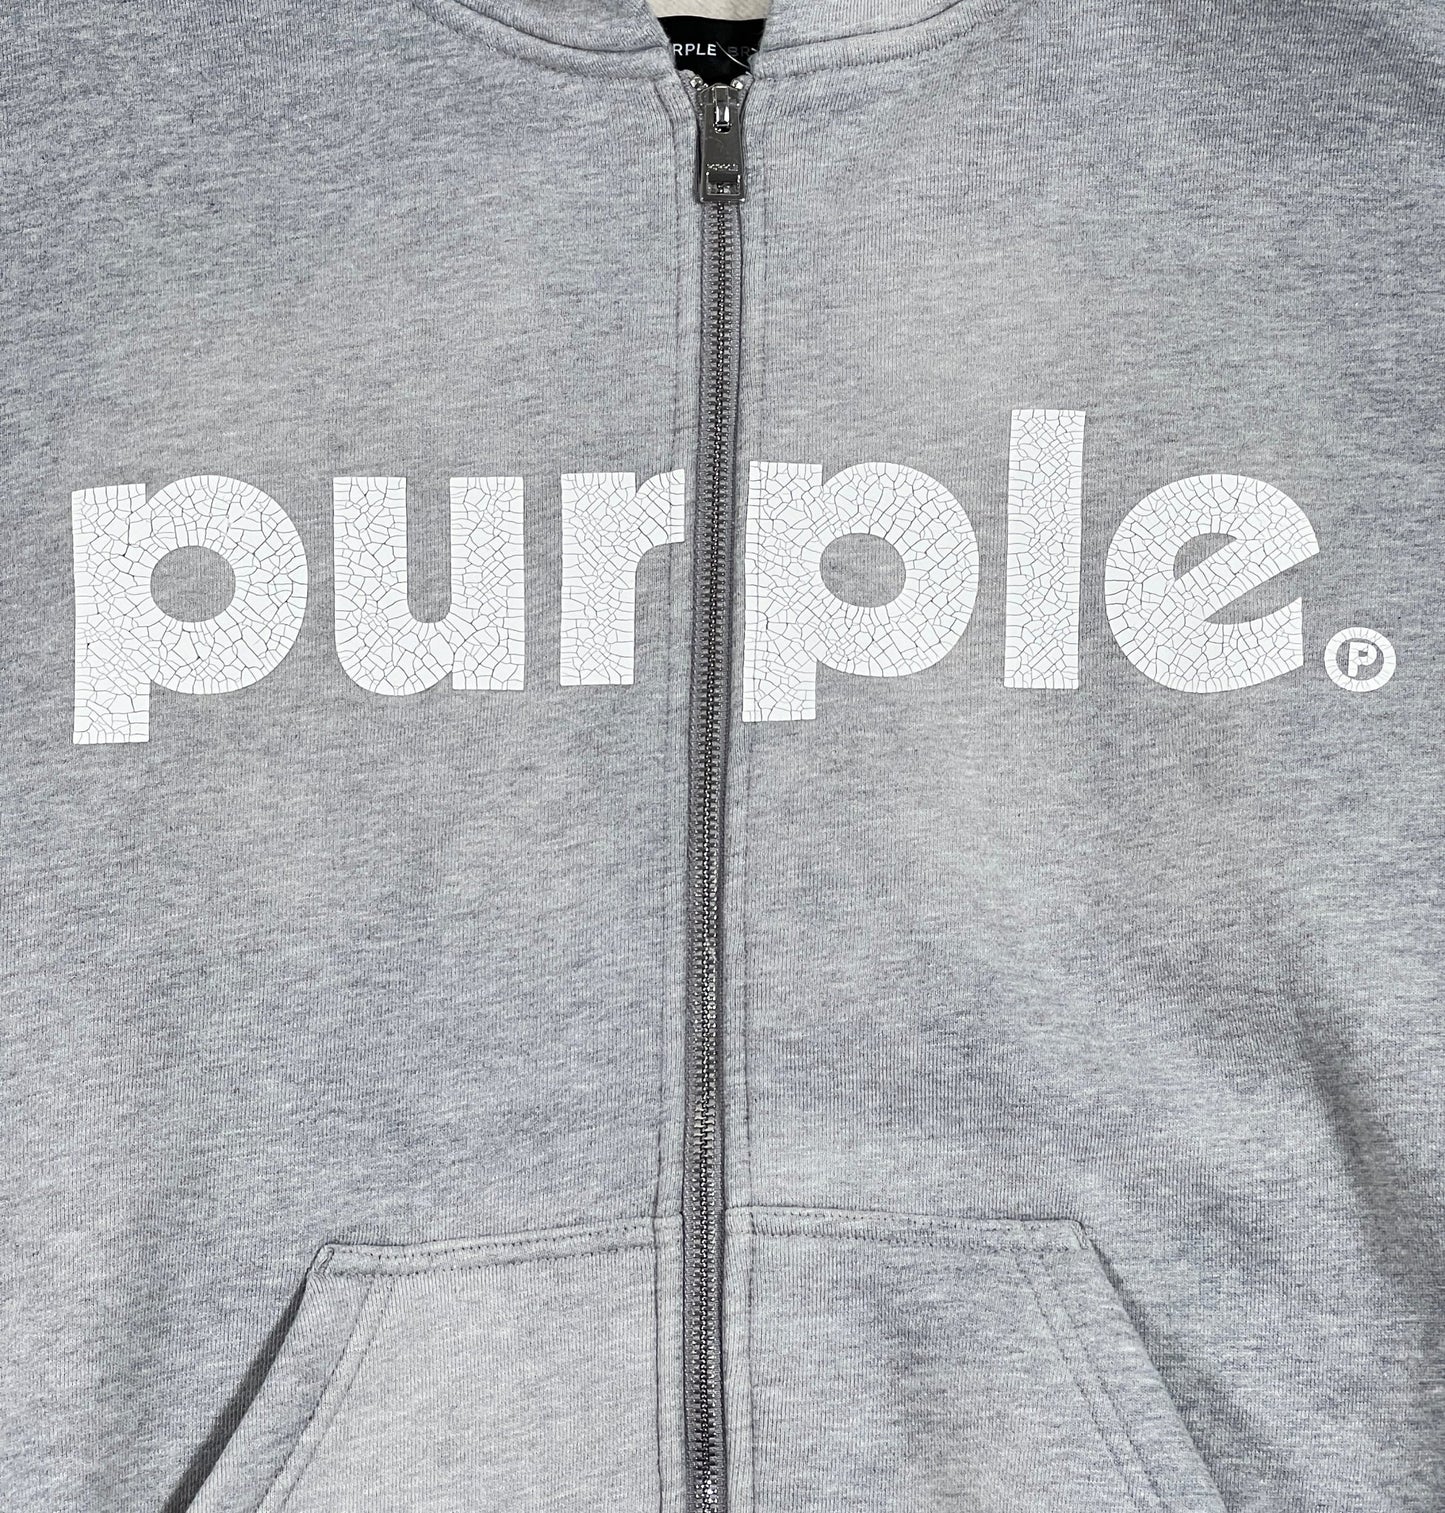 A comfortable PURPLE BRAND HOODIE P460-FHGL HWT FLEECE FULL ZIP HOOD HEATH with the word "purple" on it.